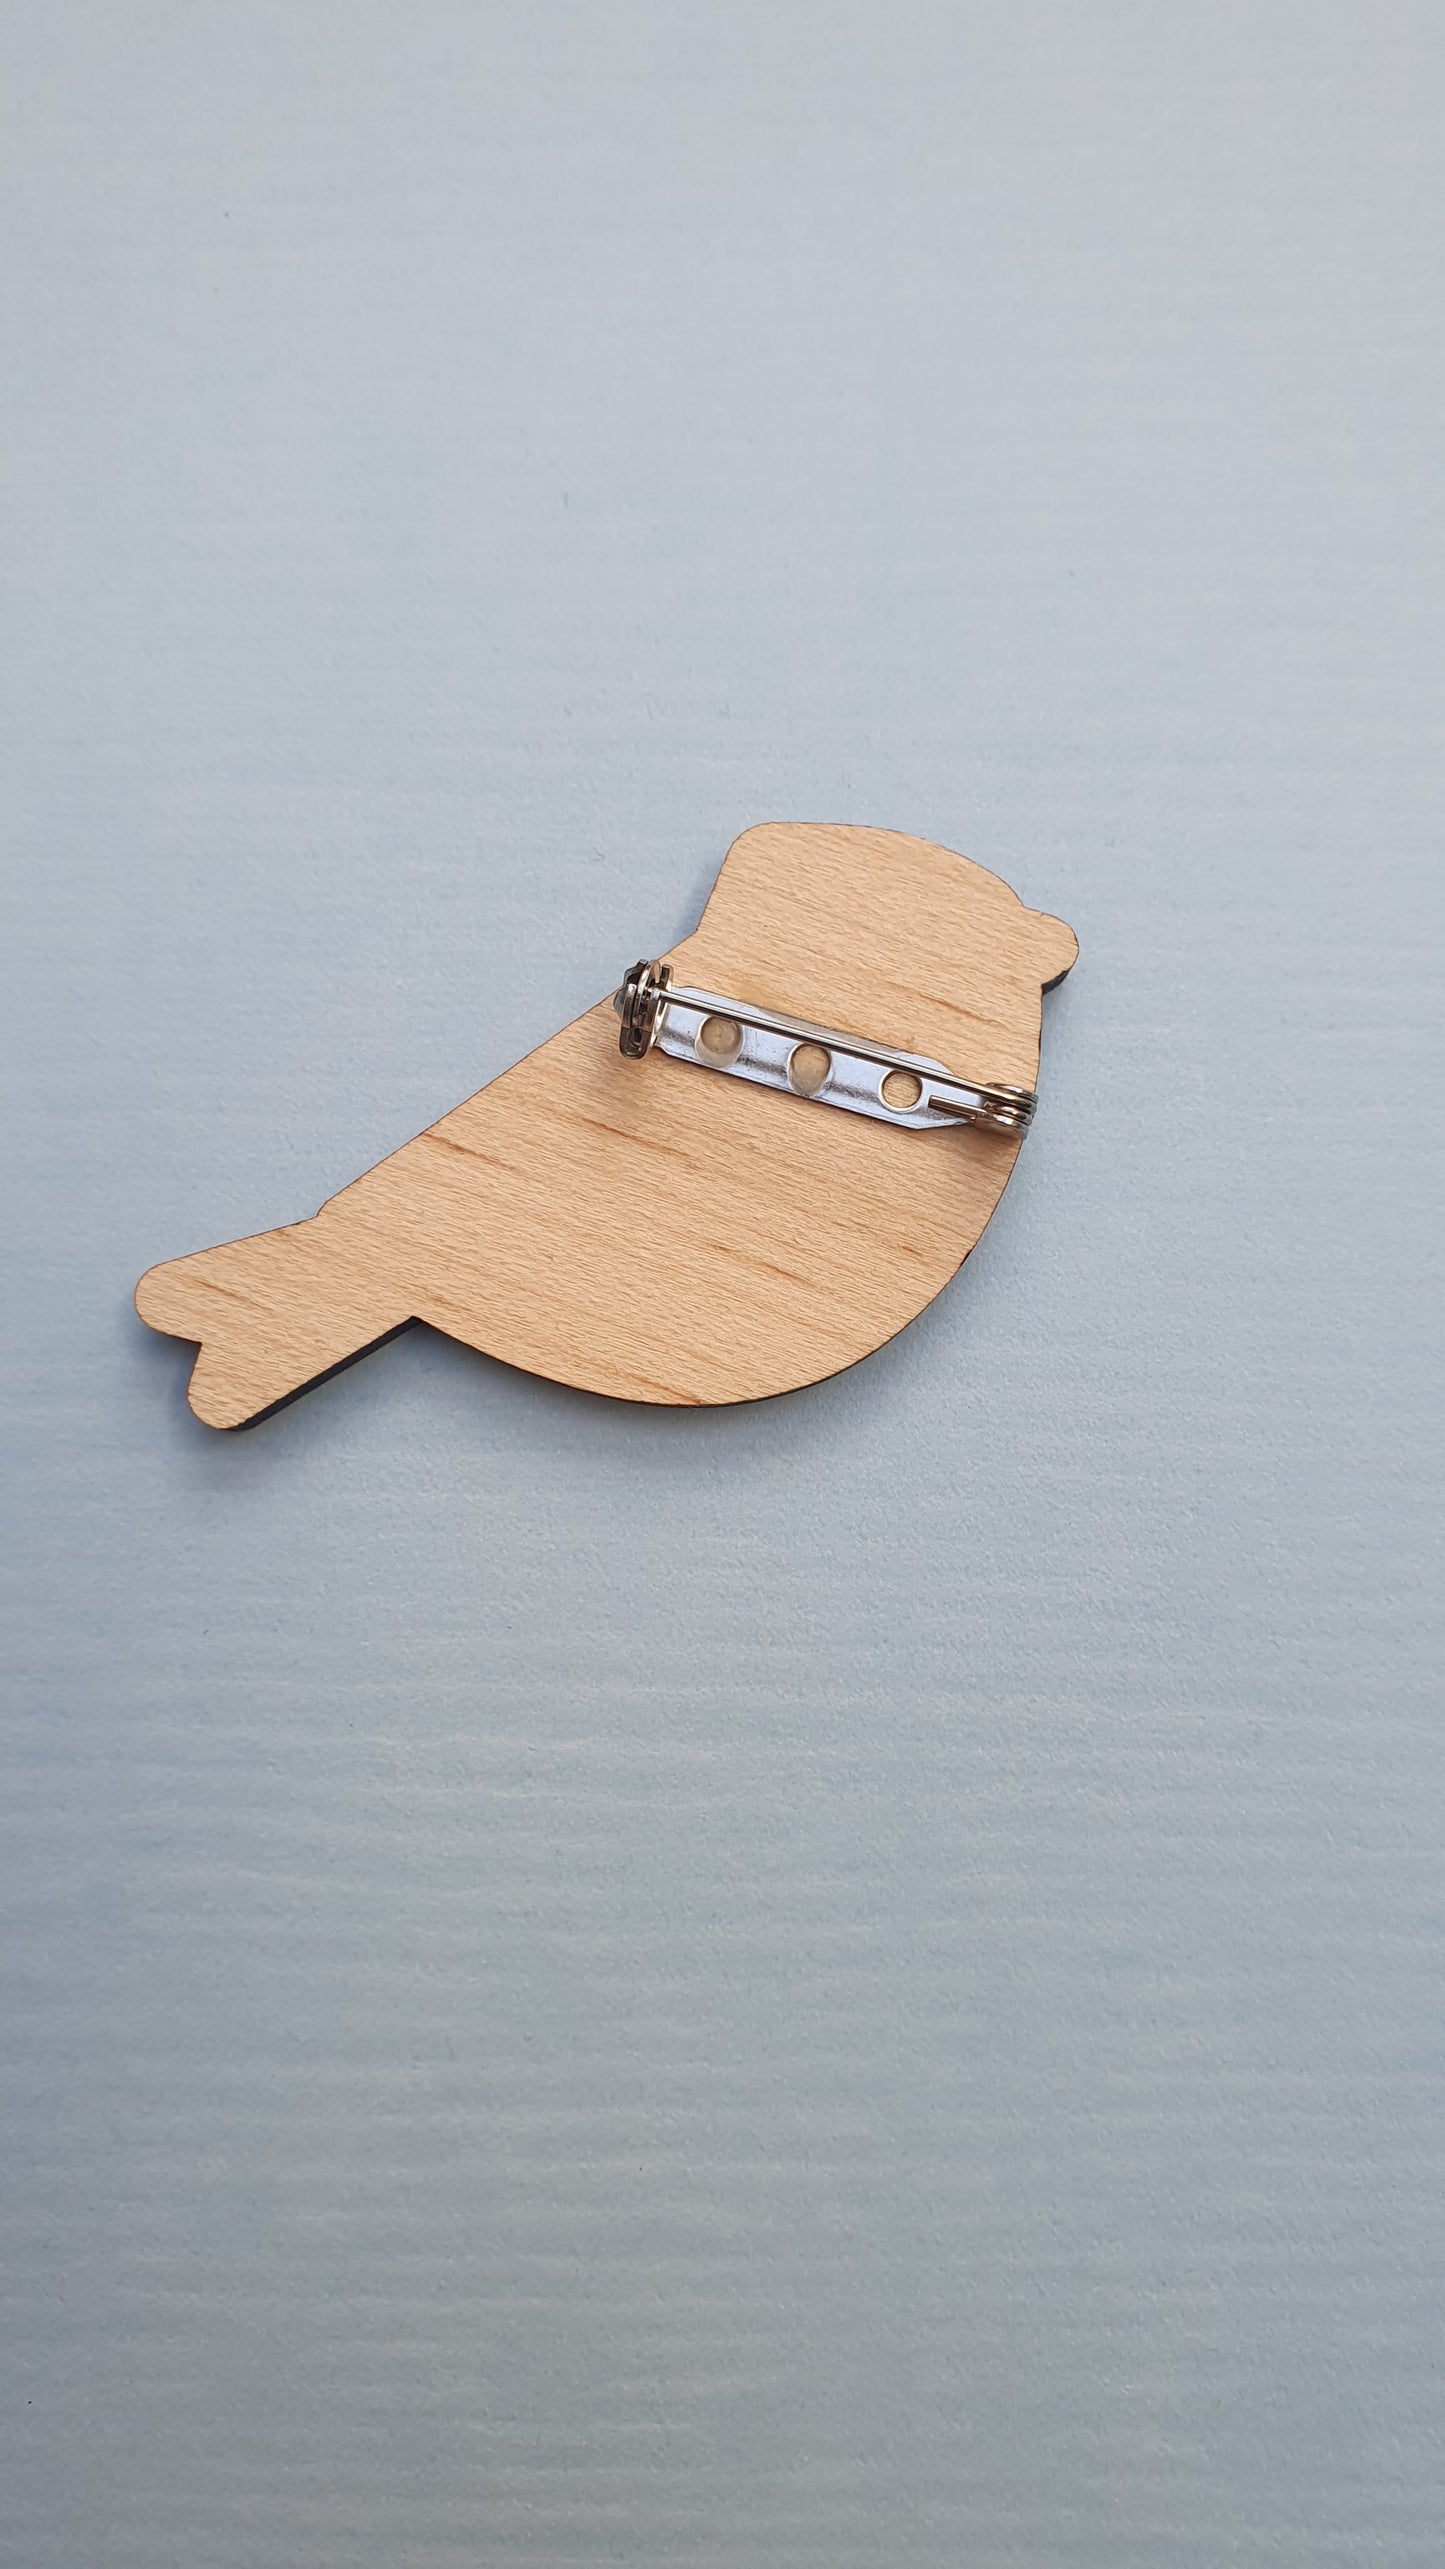 Goldfinch bird wood pin badge brooch